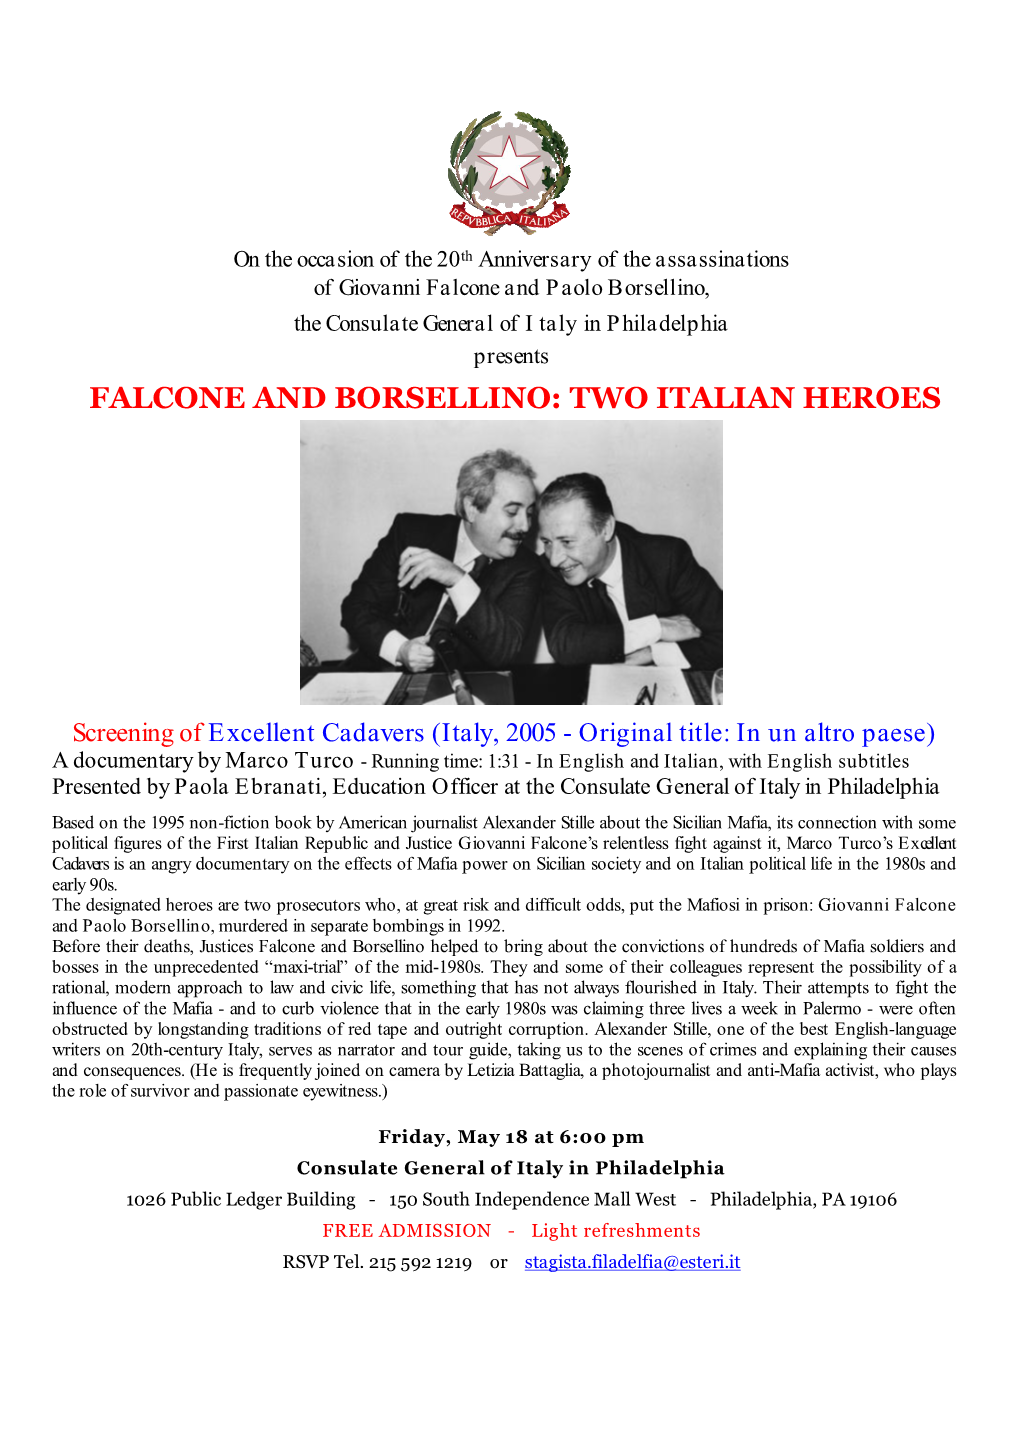 Falcone and Borsellino: Two Italian Heroes